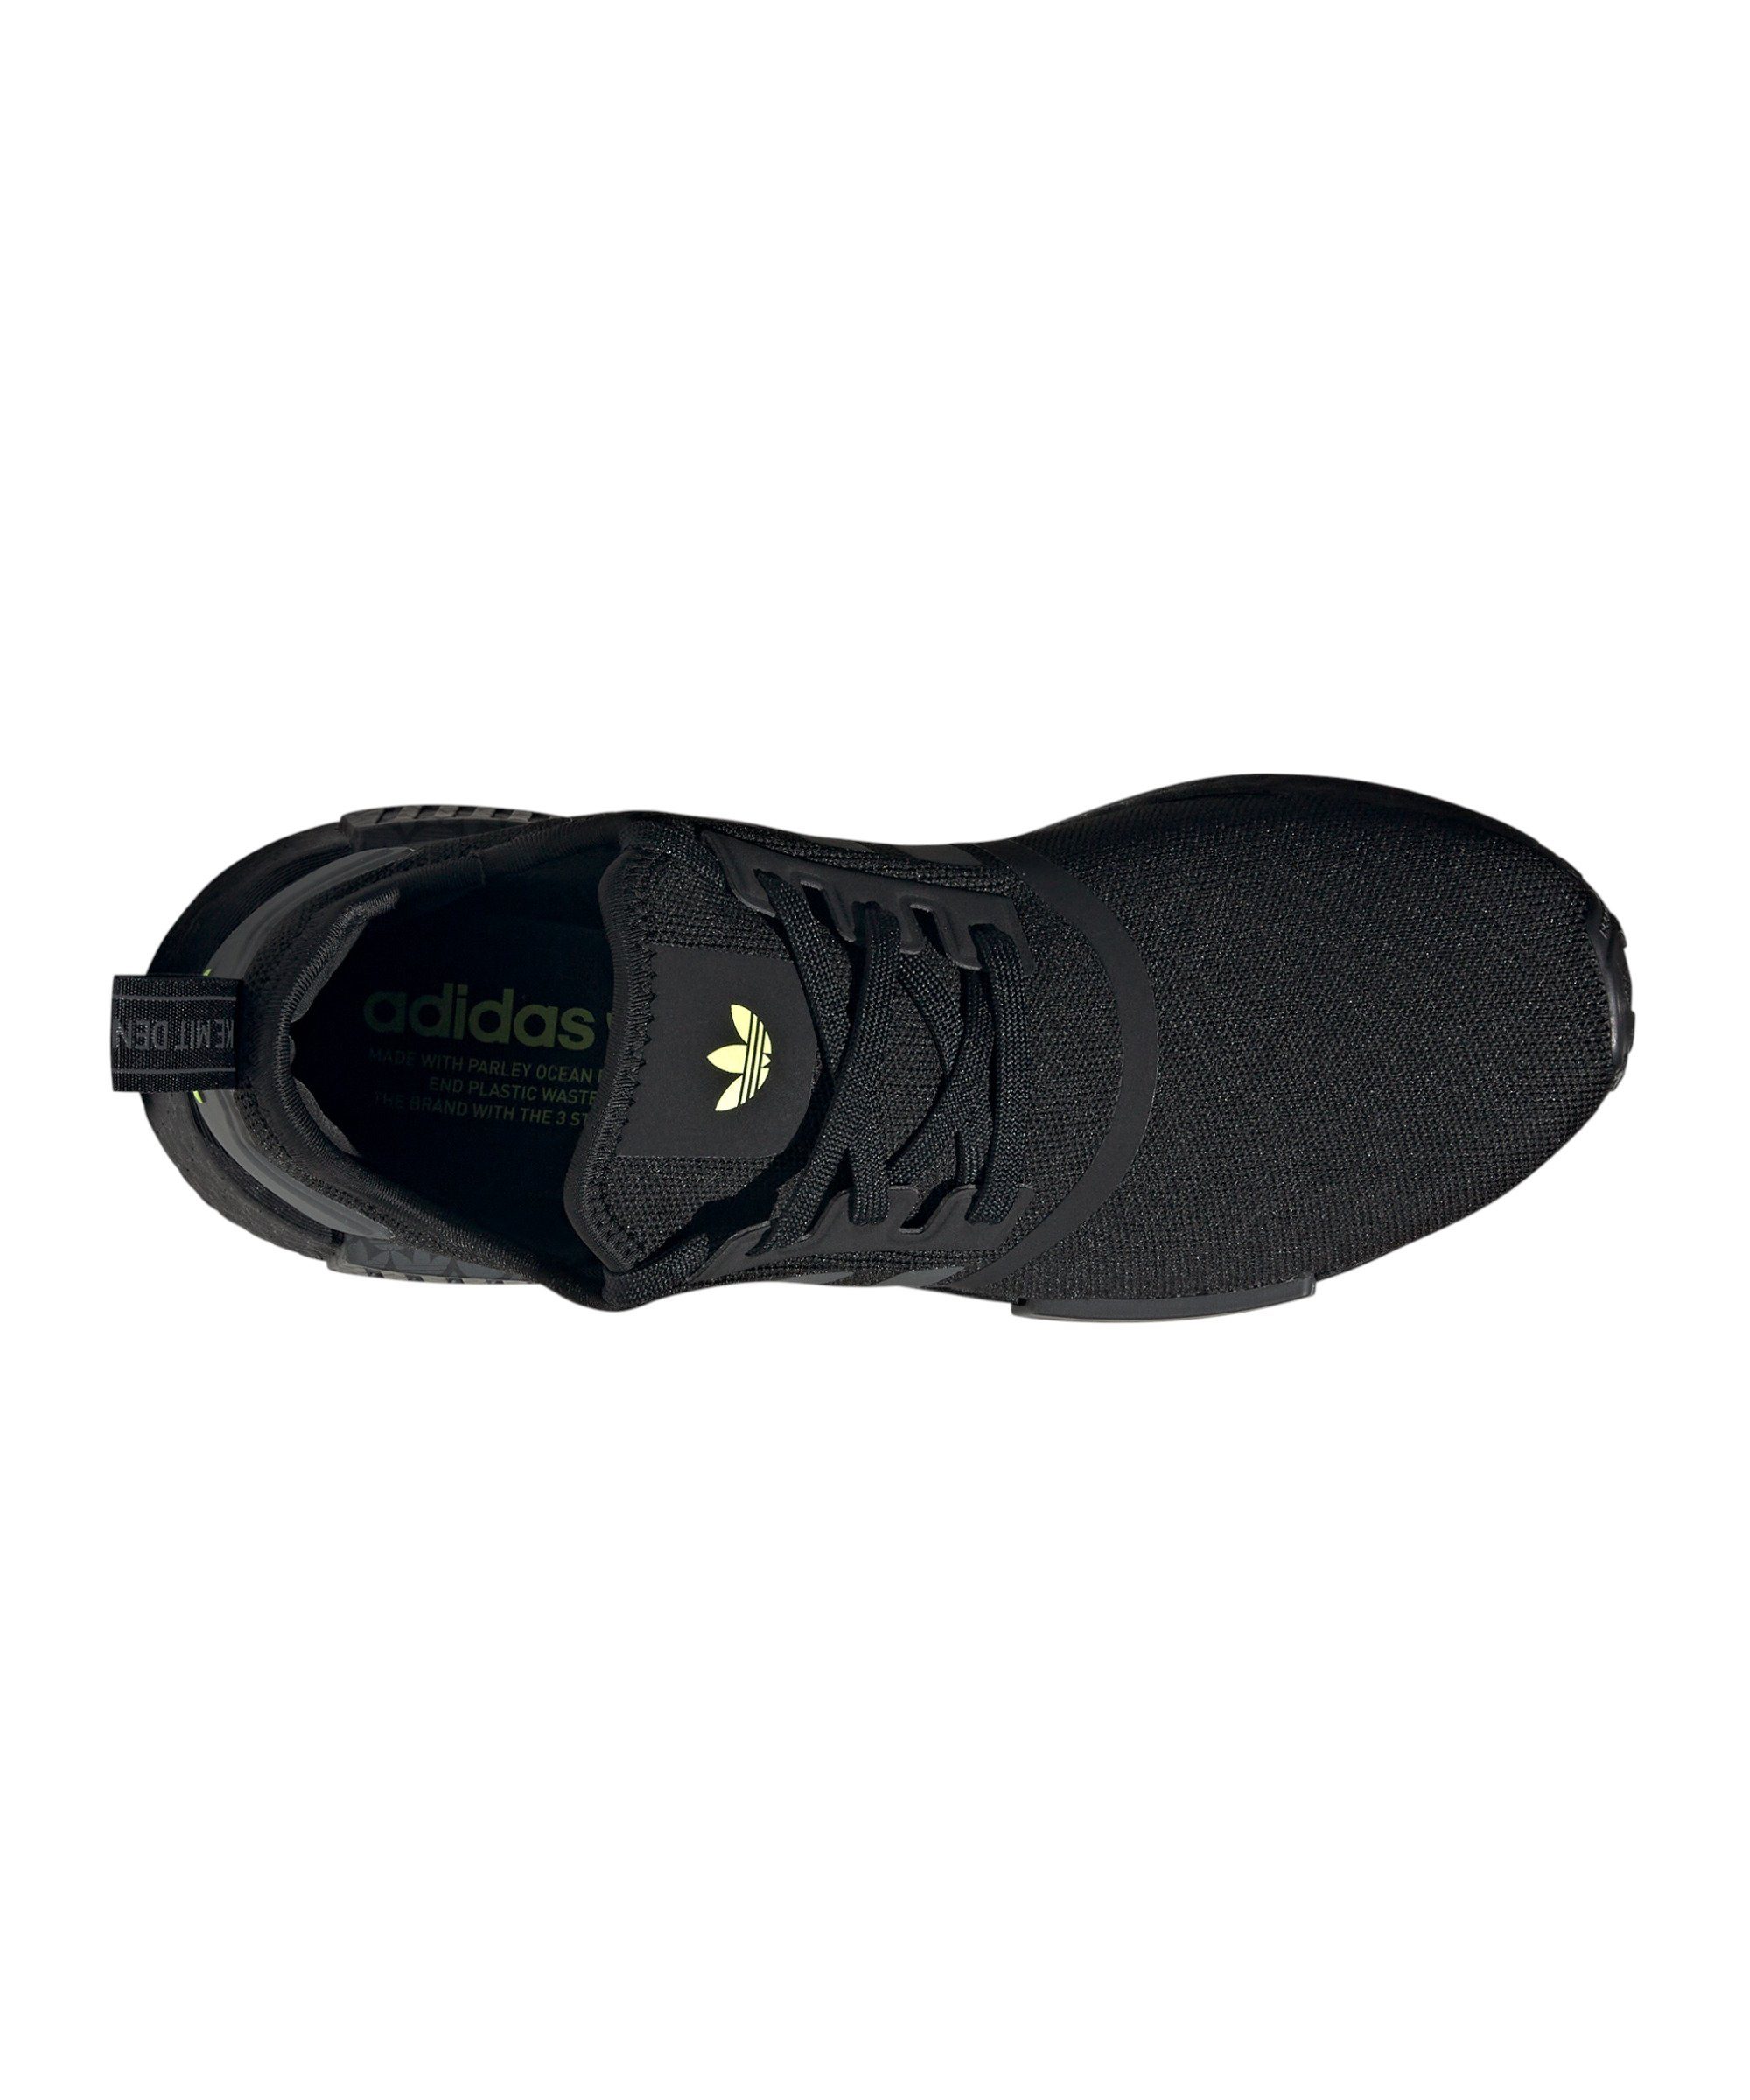 schwarzgraugelb NMD_R1 Sneaker adidas Originals